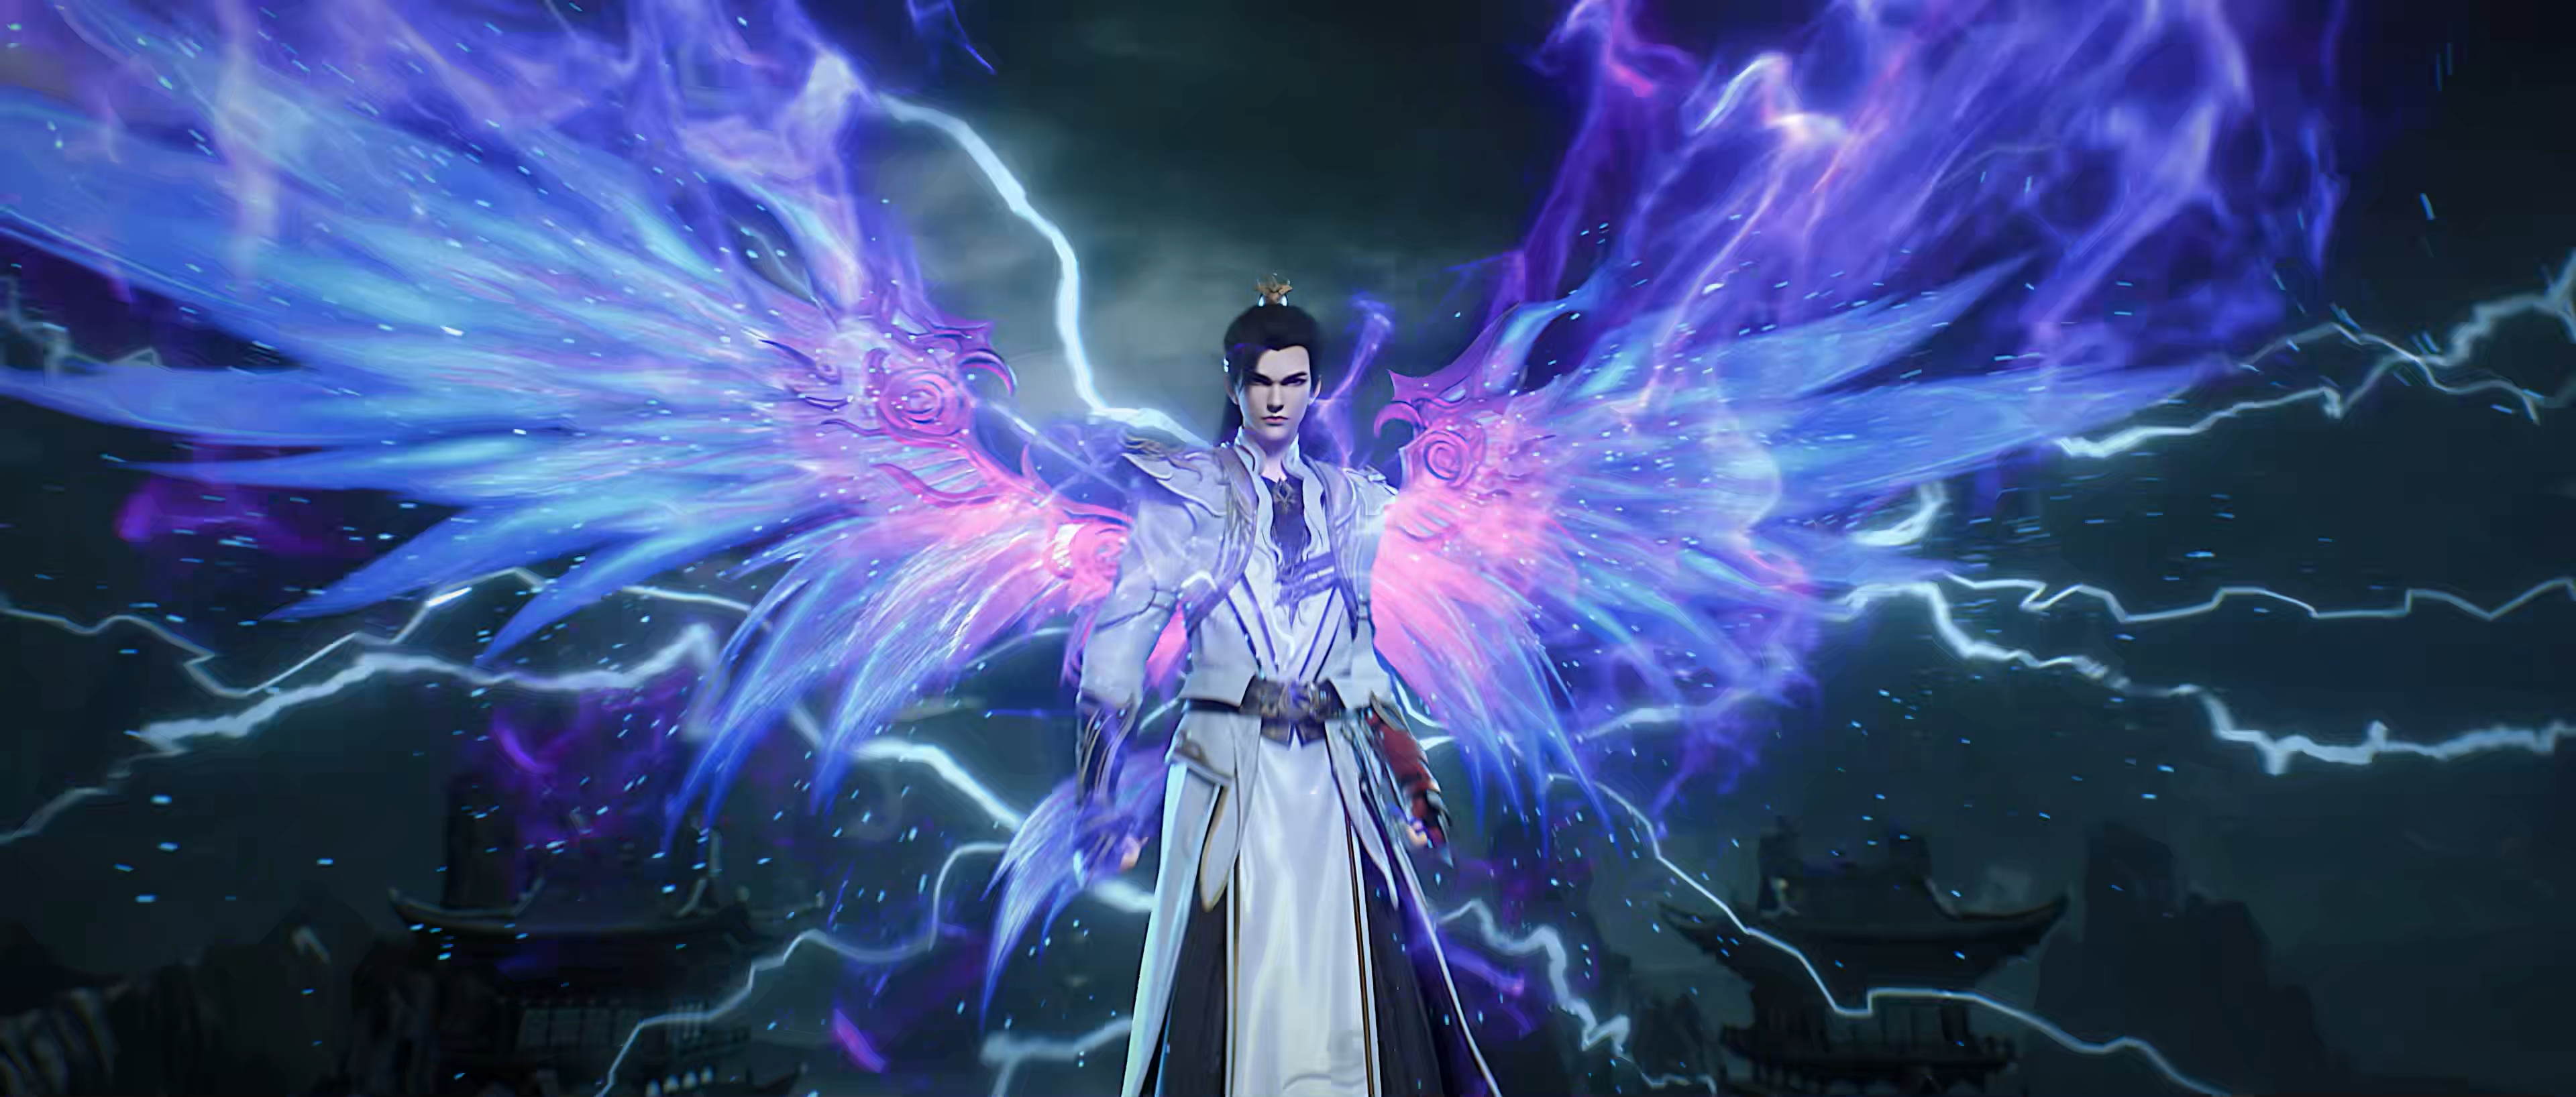 General 3840x1636 Wan Mei Shi Jie wings fantasy art fantasy men Chinese cartoon CGI screen shot long hair dark hair lightning looking at viewer fist